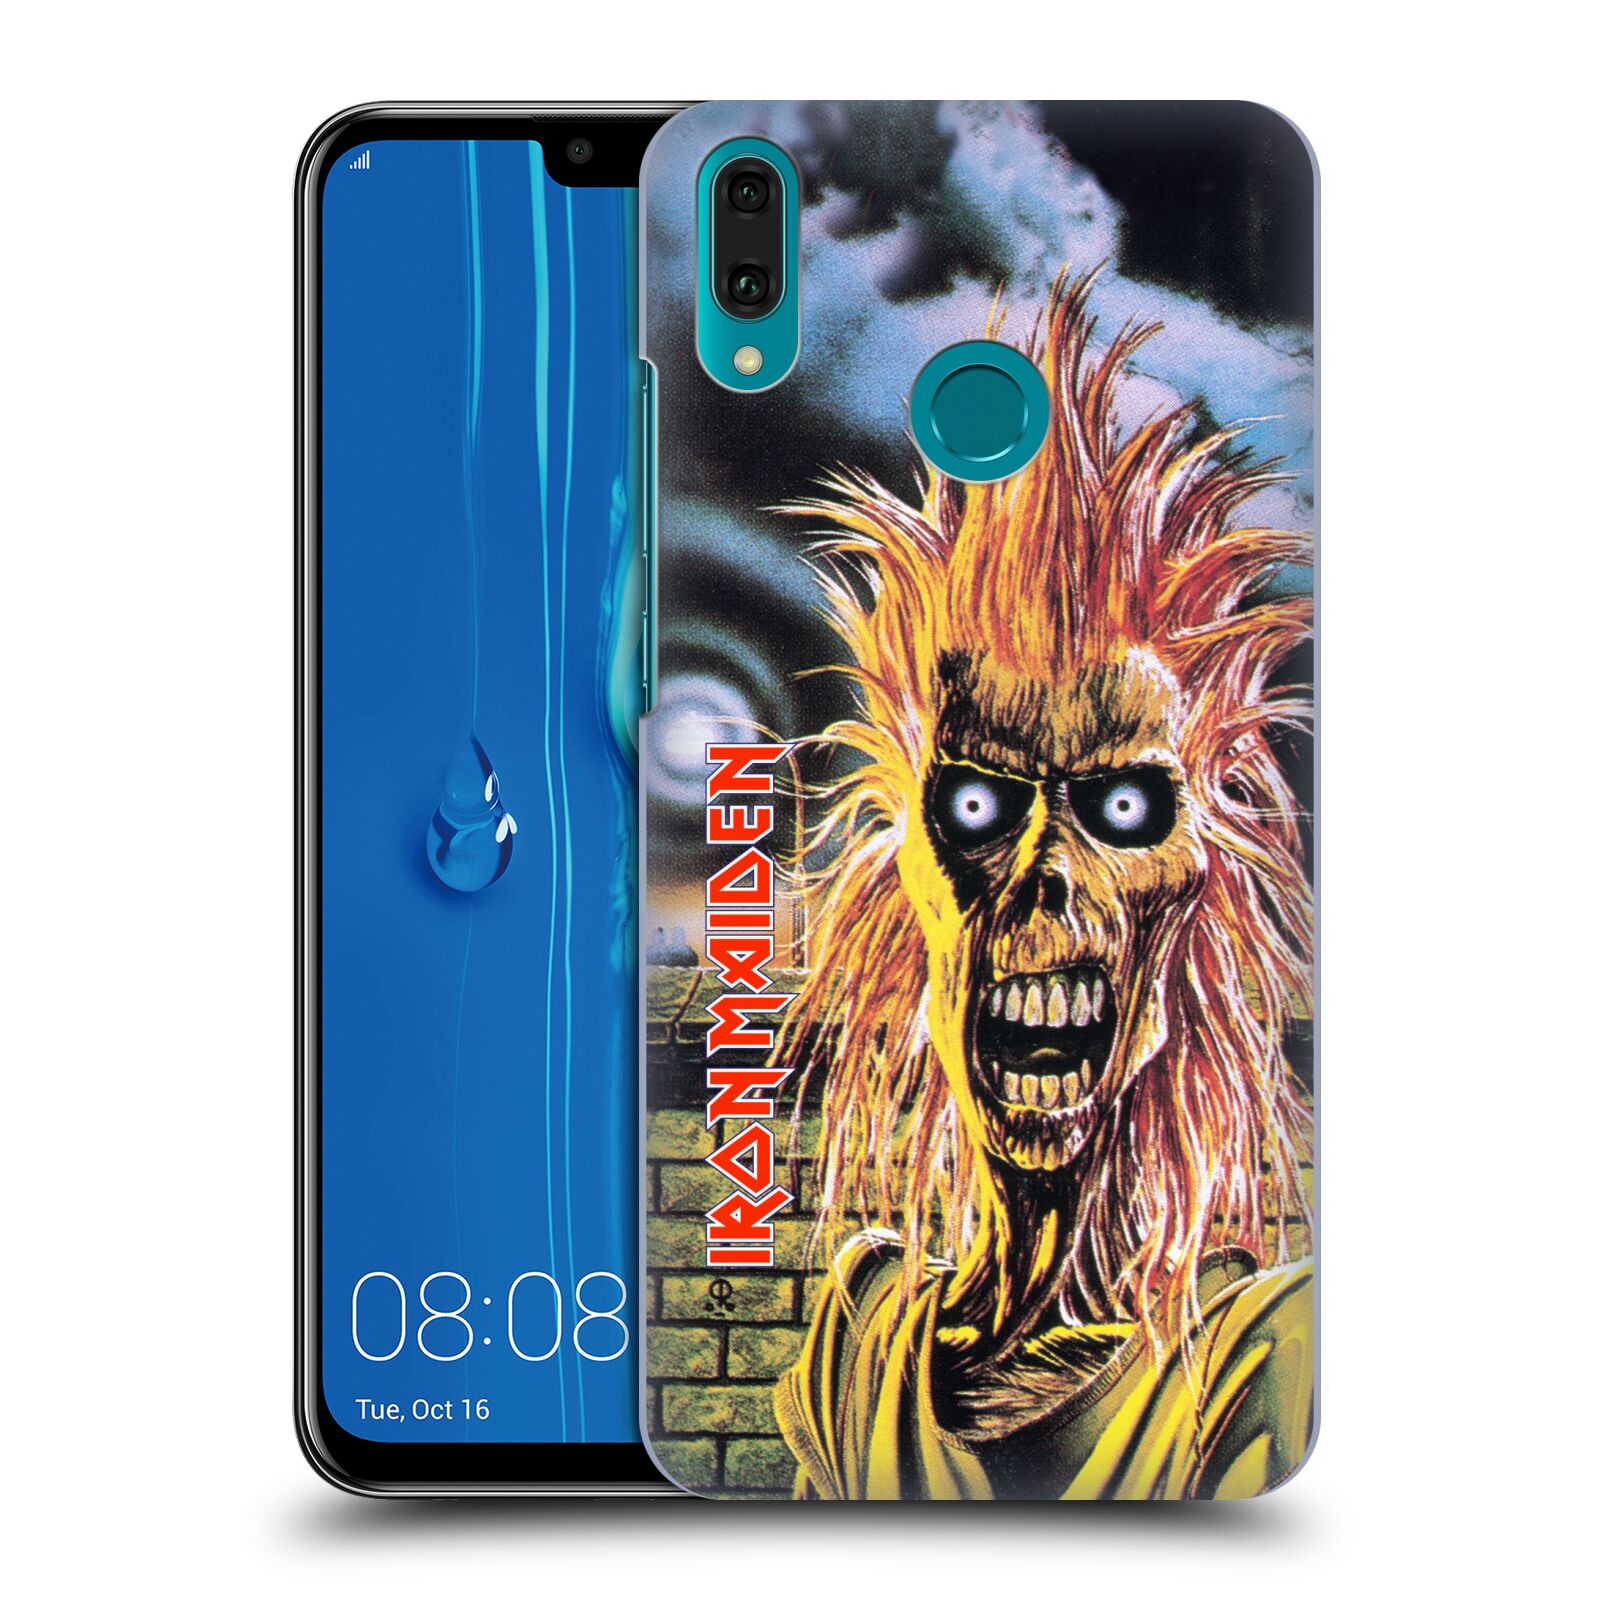 Pouzdro na mobil Huawei Y9 2019 - HEAD CASE - Heavymetalová skupina Iron Maiden punker